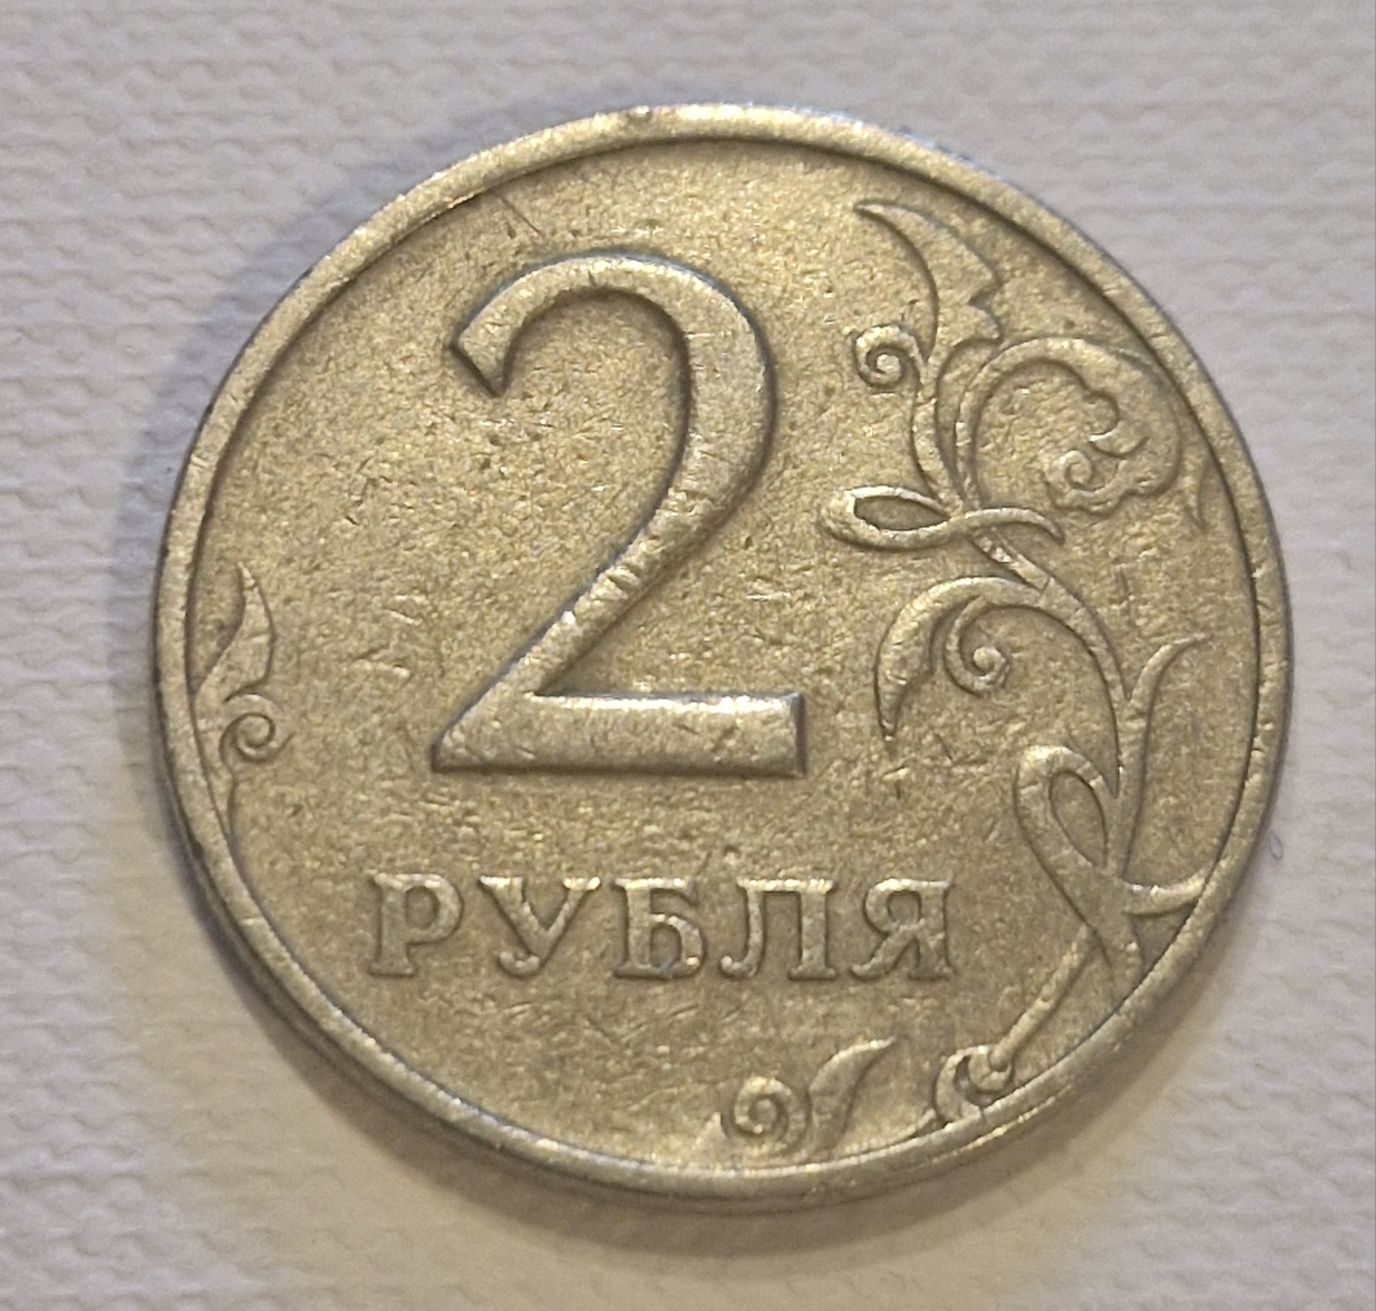 Moneta 2 ruble 1997r